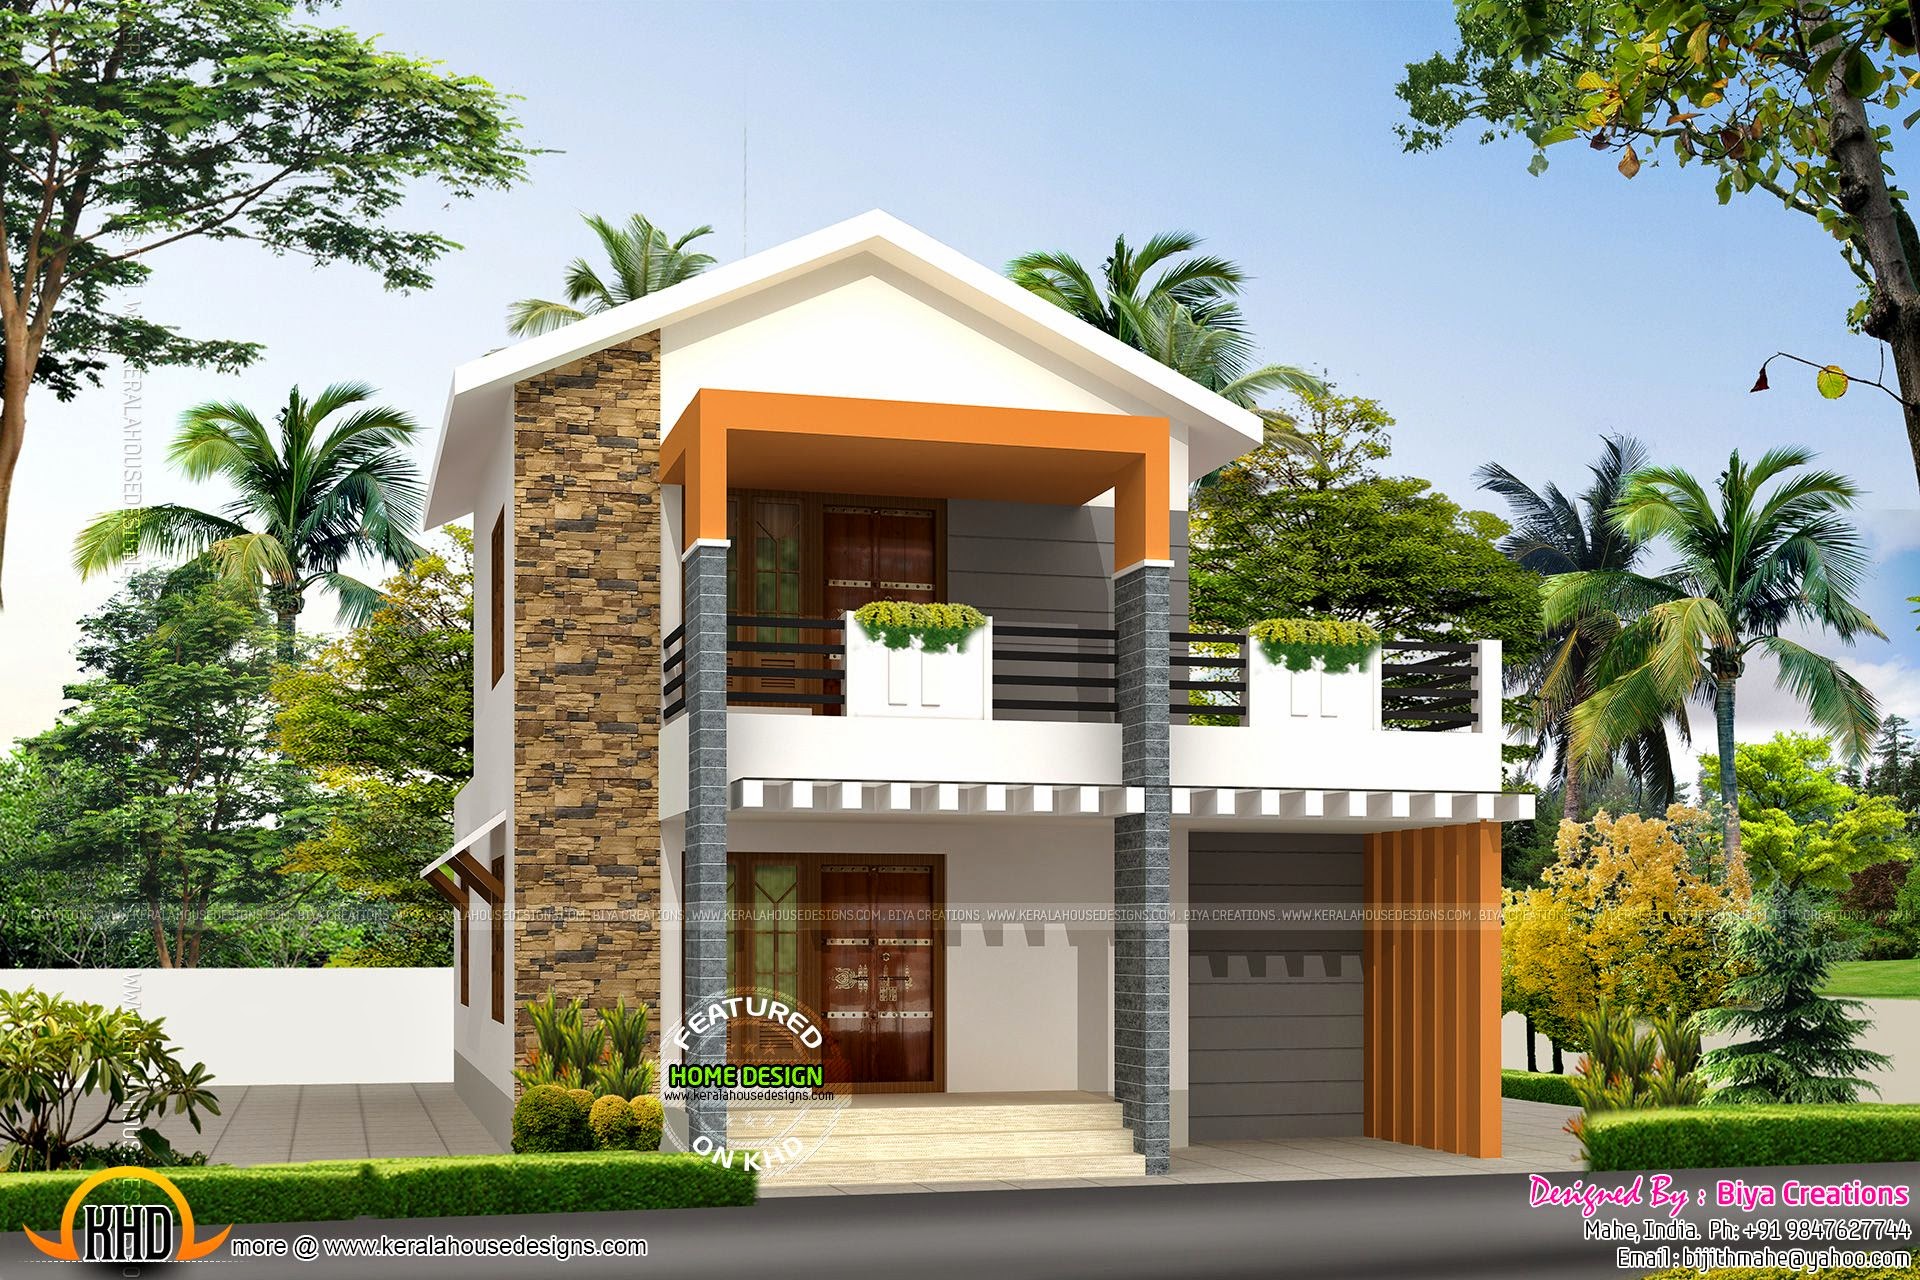  House  model  Kerala  keralahousedesigns